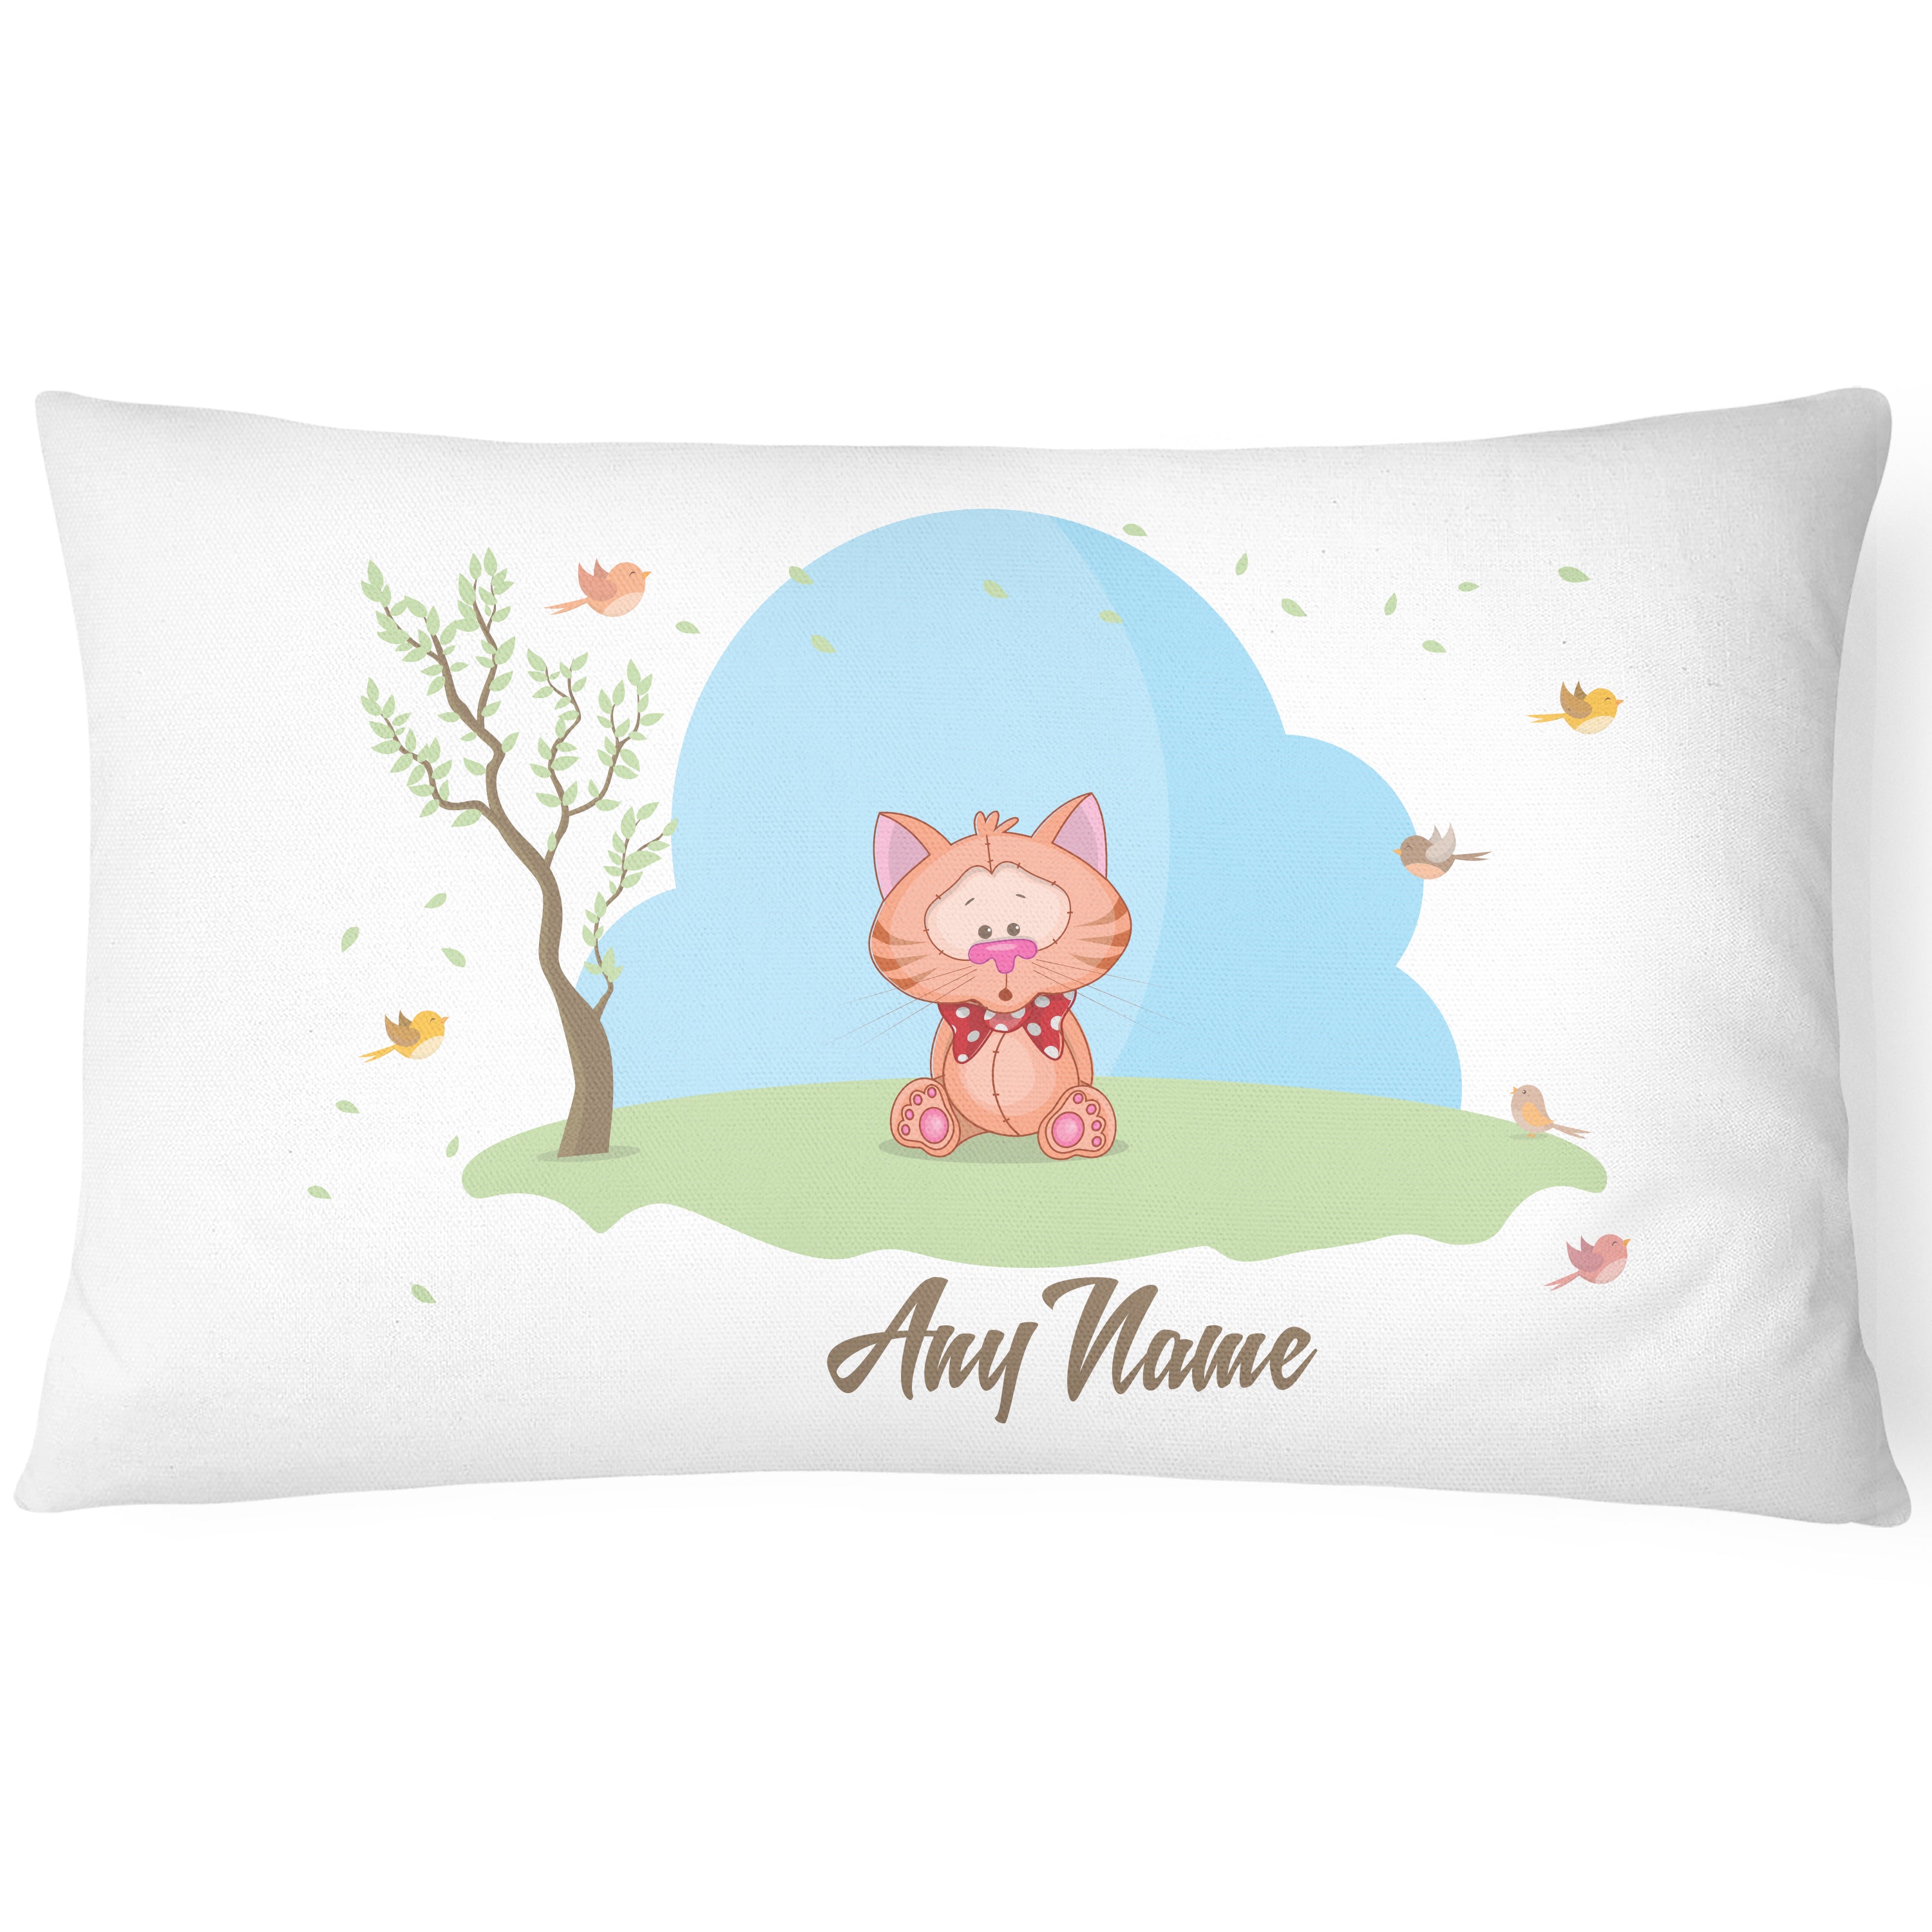 Personalised Children's Pillowcase Cute Animal - Enchanting